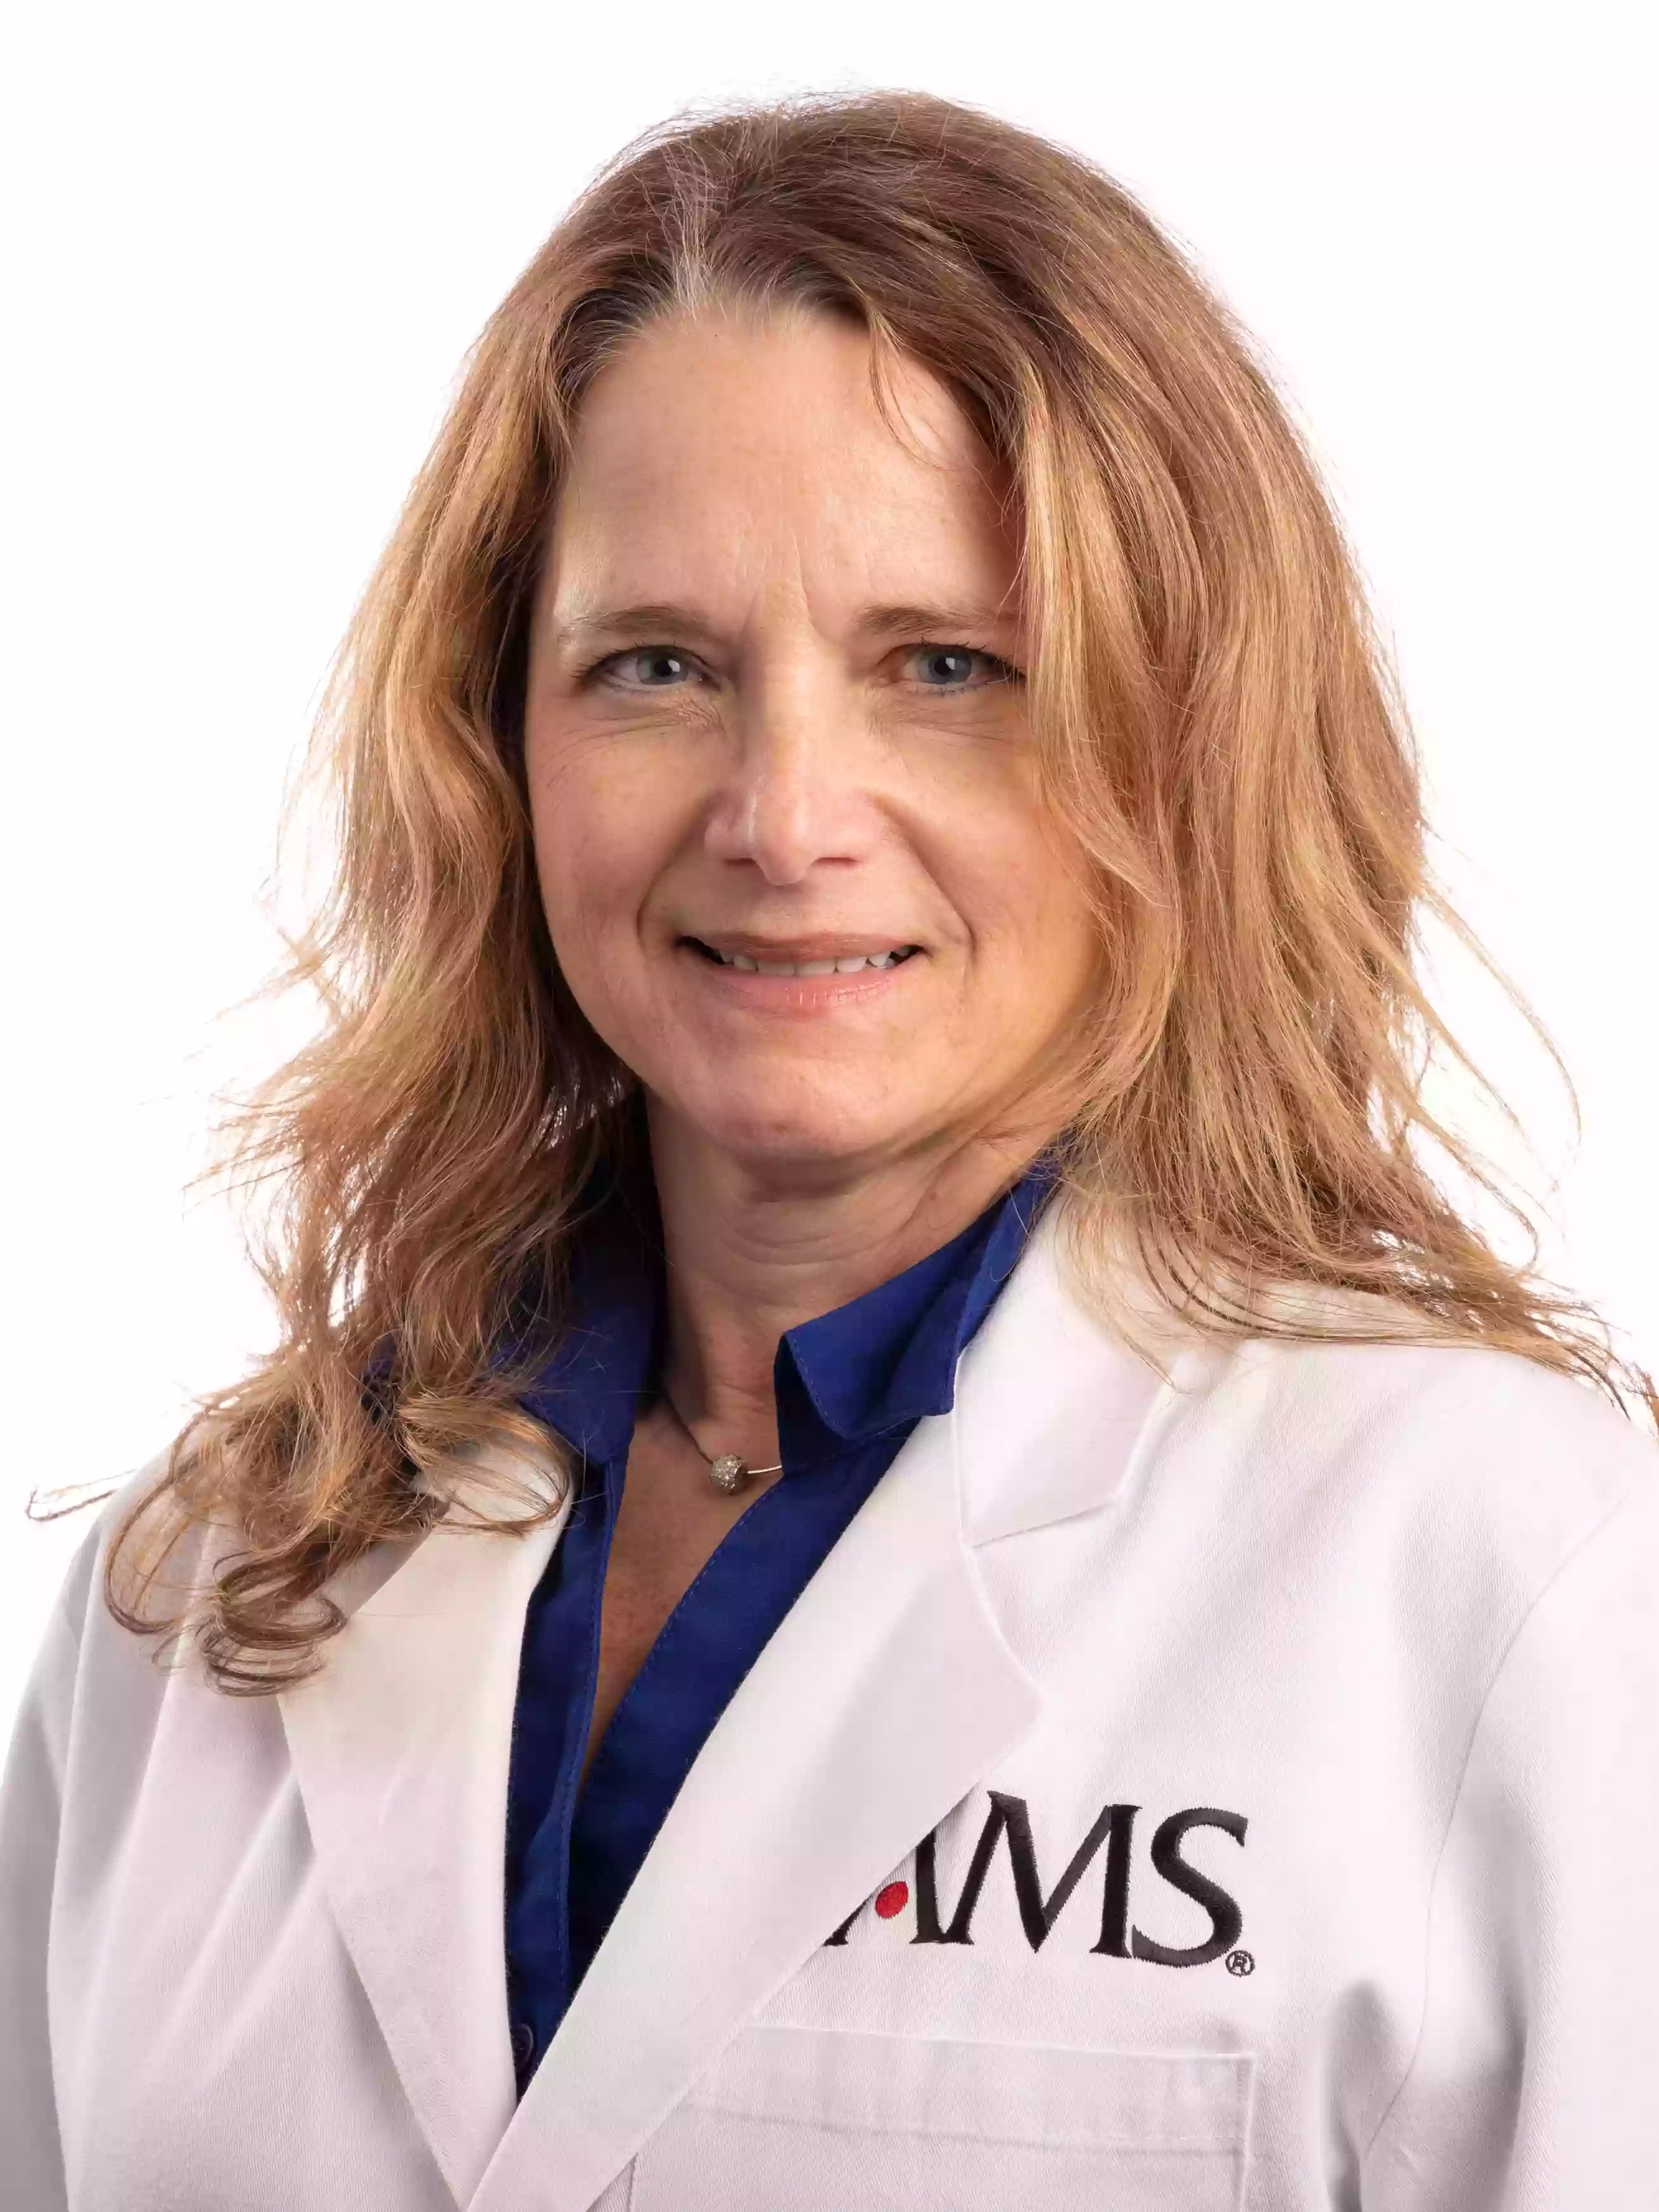 UAMS - Mary Ann Scott, Ph.D.